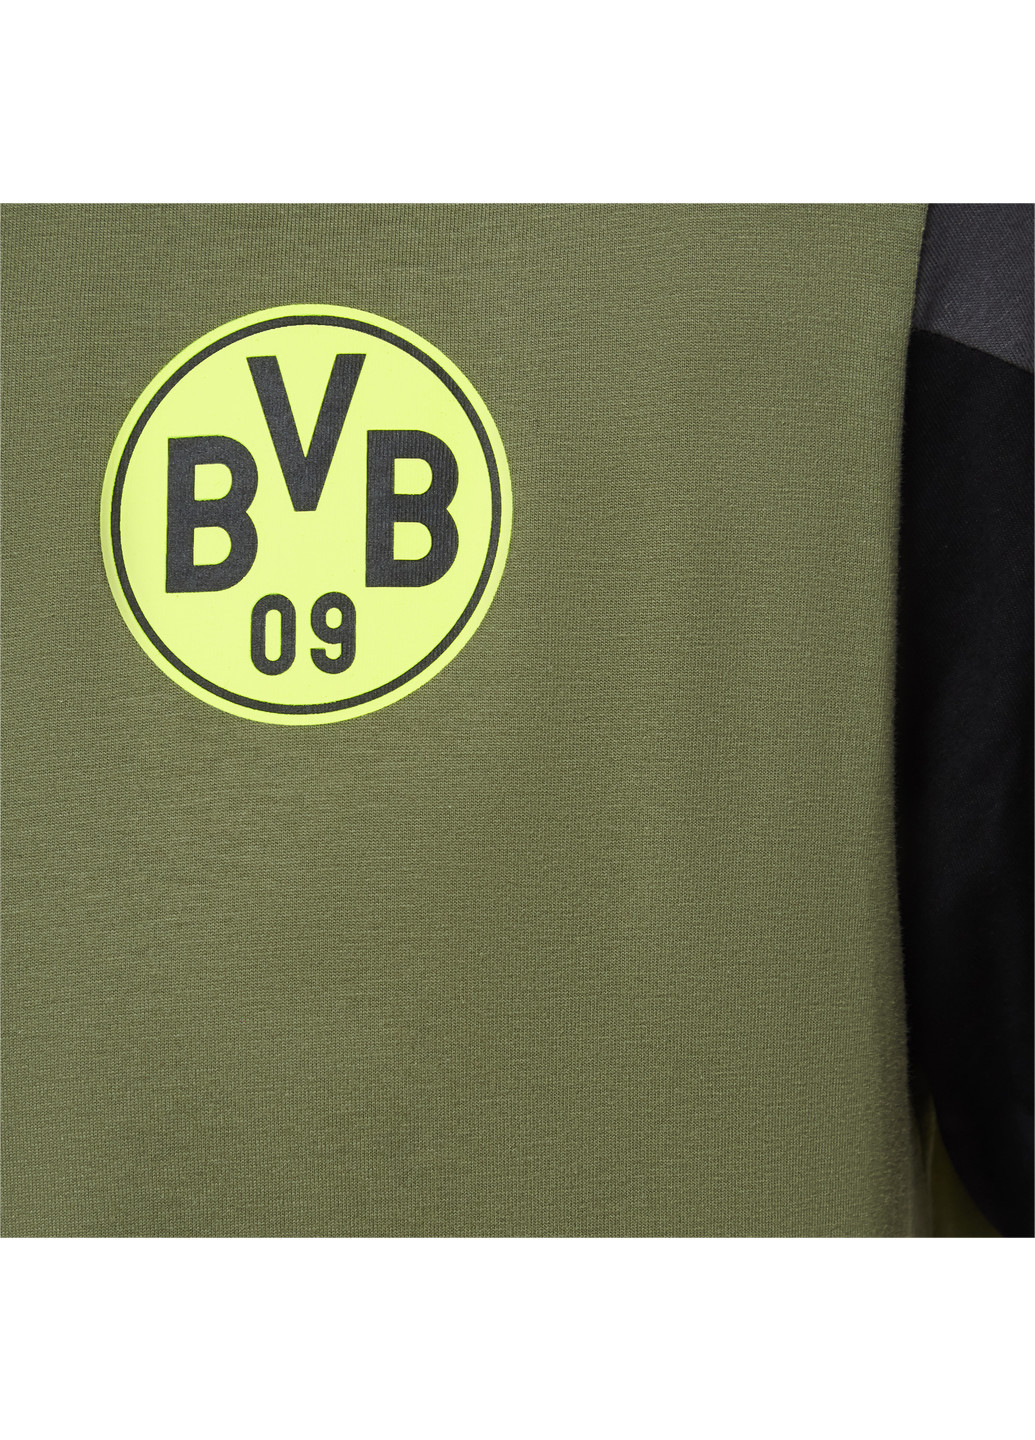 Футболка BVB FtblCulture Men’s Football Tee Puma однотонная зелёная спортивная хлопок, эластан